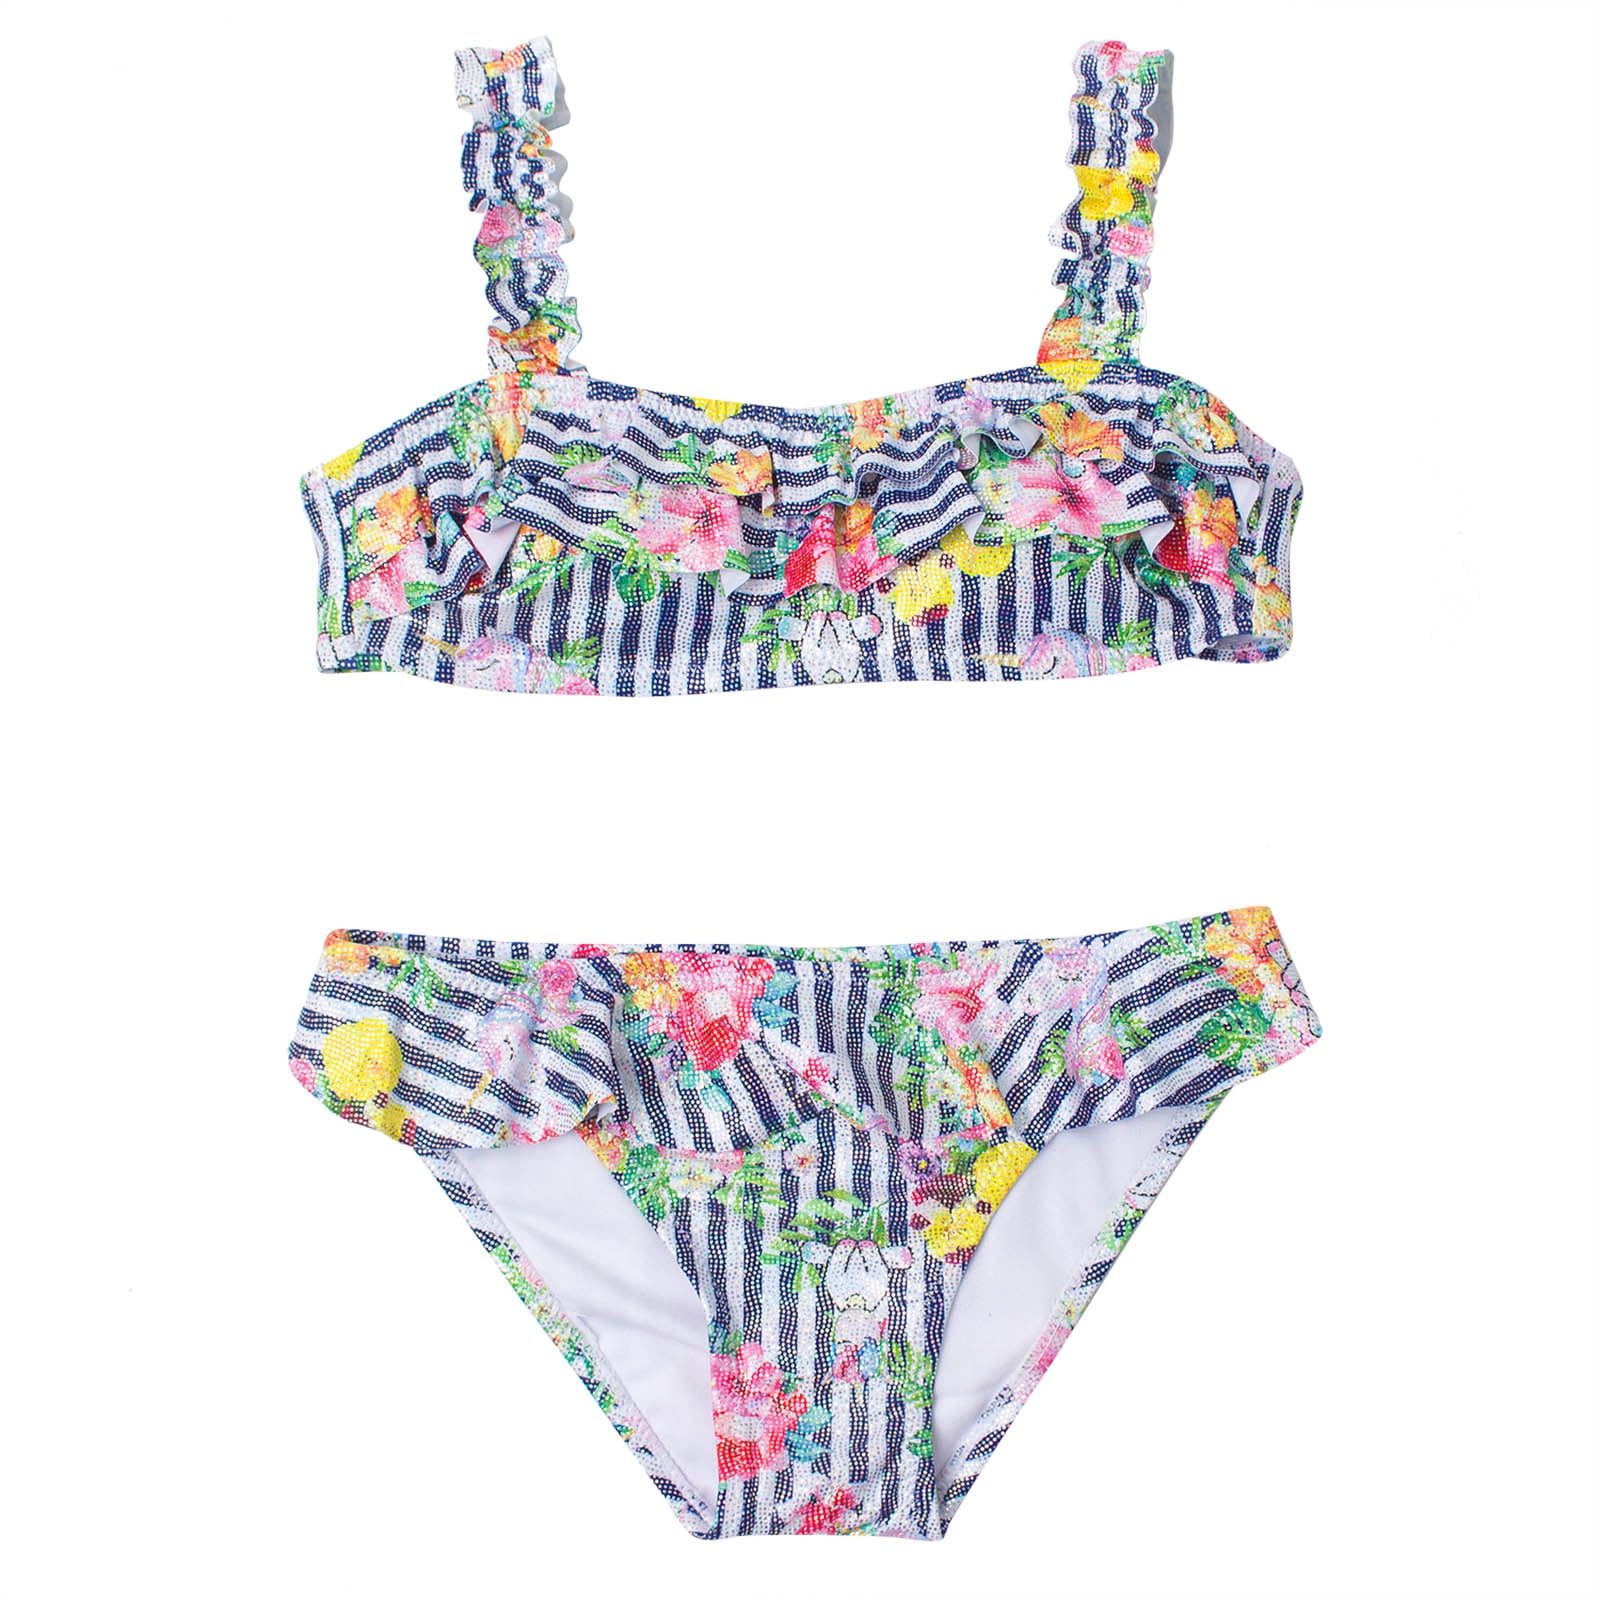 Jikolililili Girls Swimsuit Two Pieces Bikini Set Ruffle Bathing Suits  Flounced Tankini Swimwear 